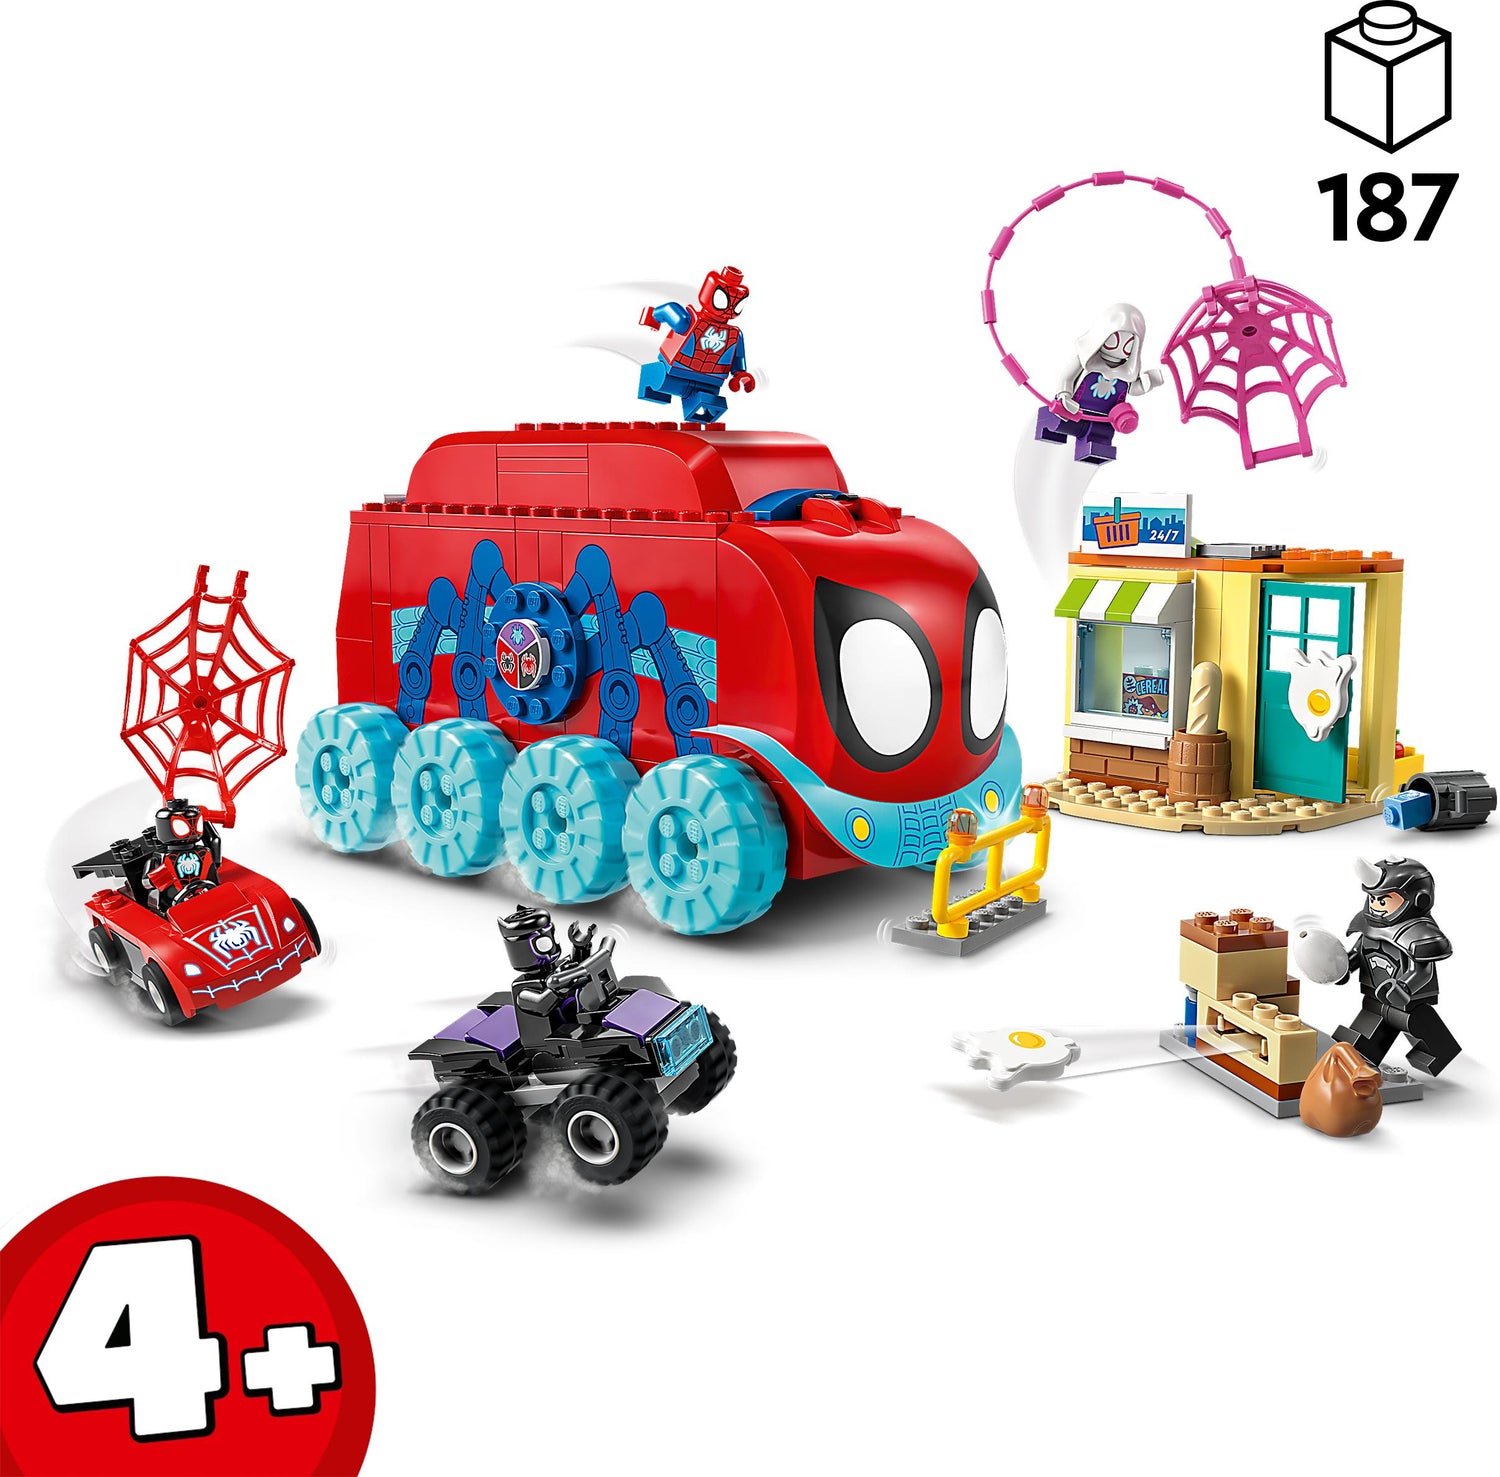 LEGO® Marvel Super Heroes Team Spidey&#39;s Mobile Headquarters